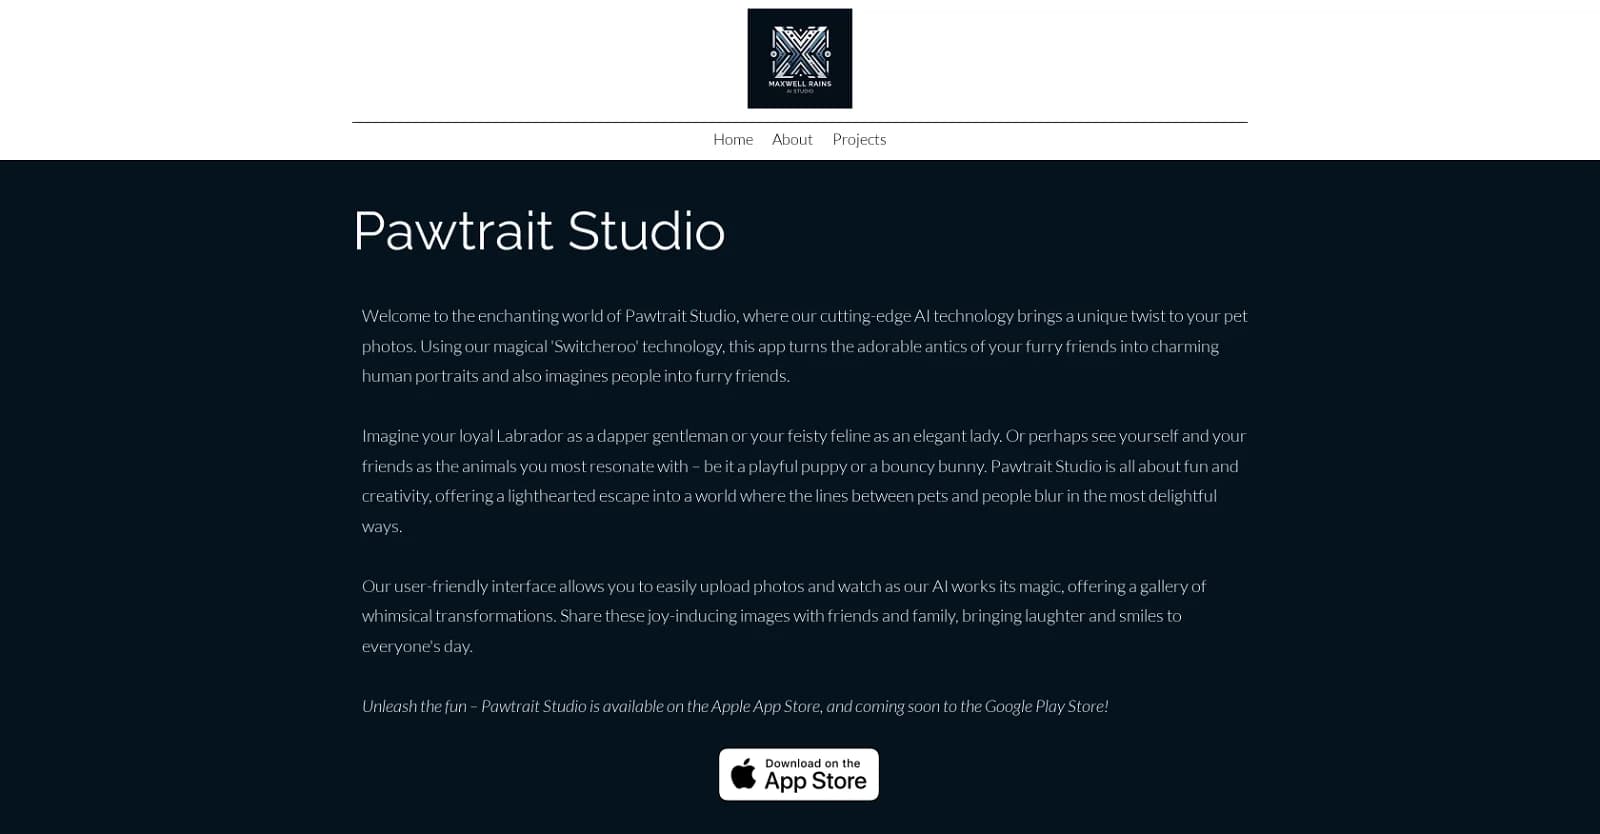 Pawtrait Studio